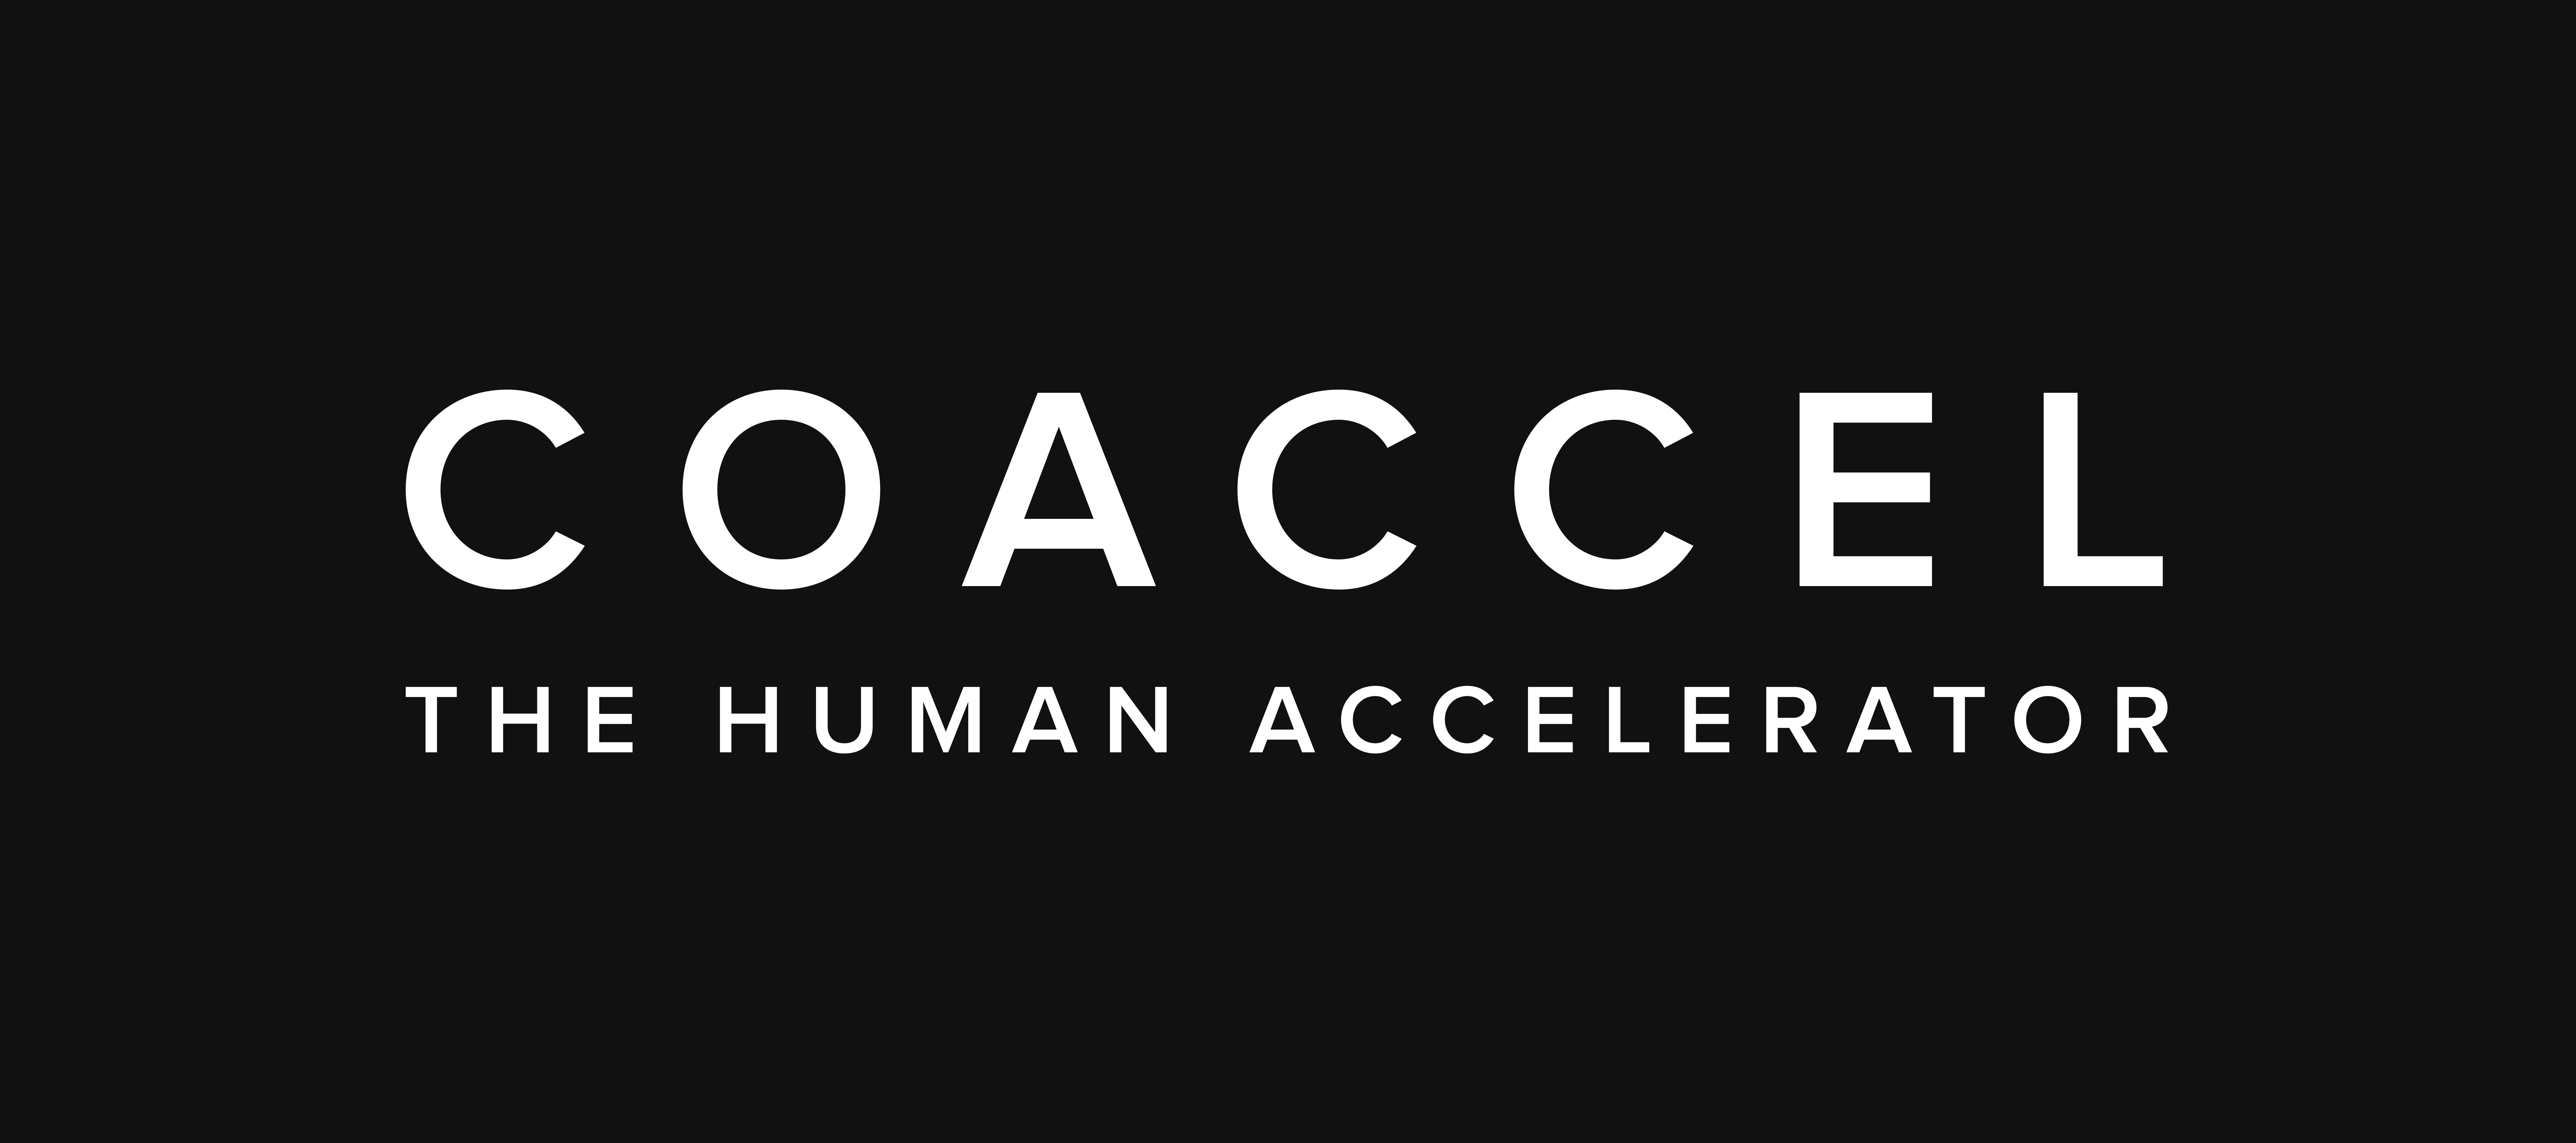 CoAccel: The Human Accelerator